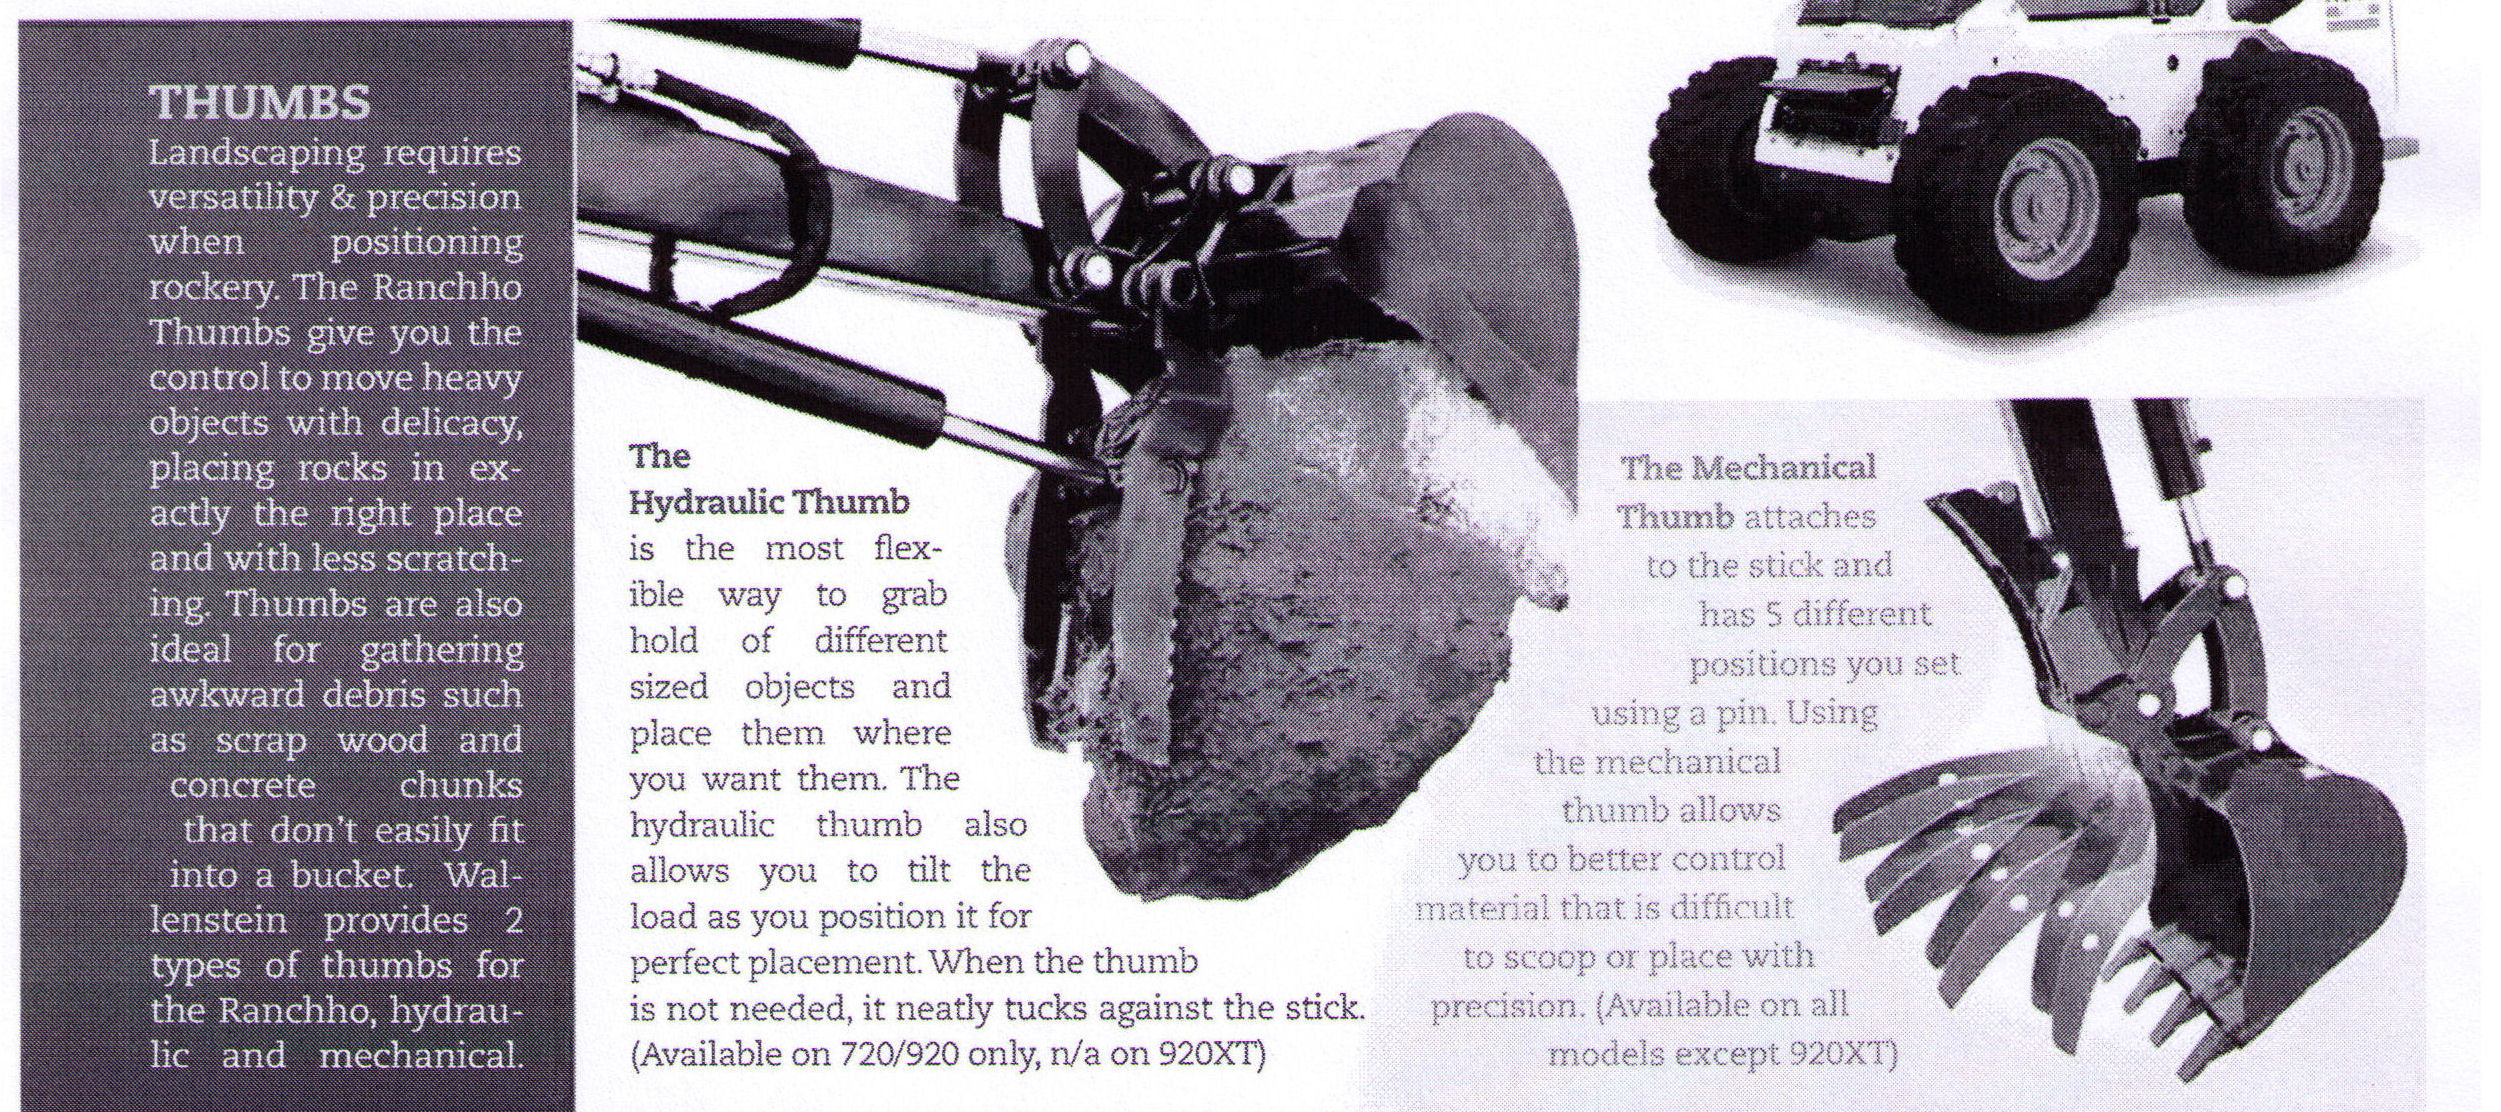 Mechanical And Hydraulic Thumb Options